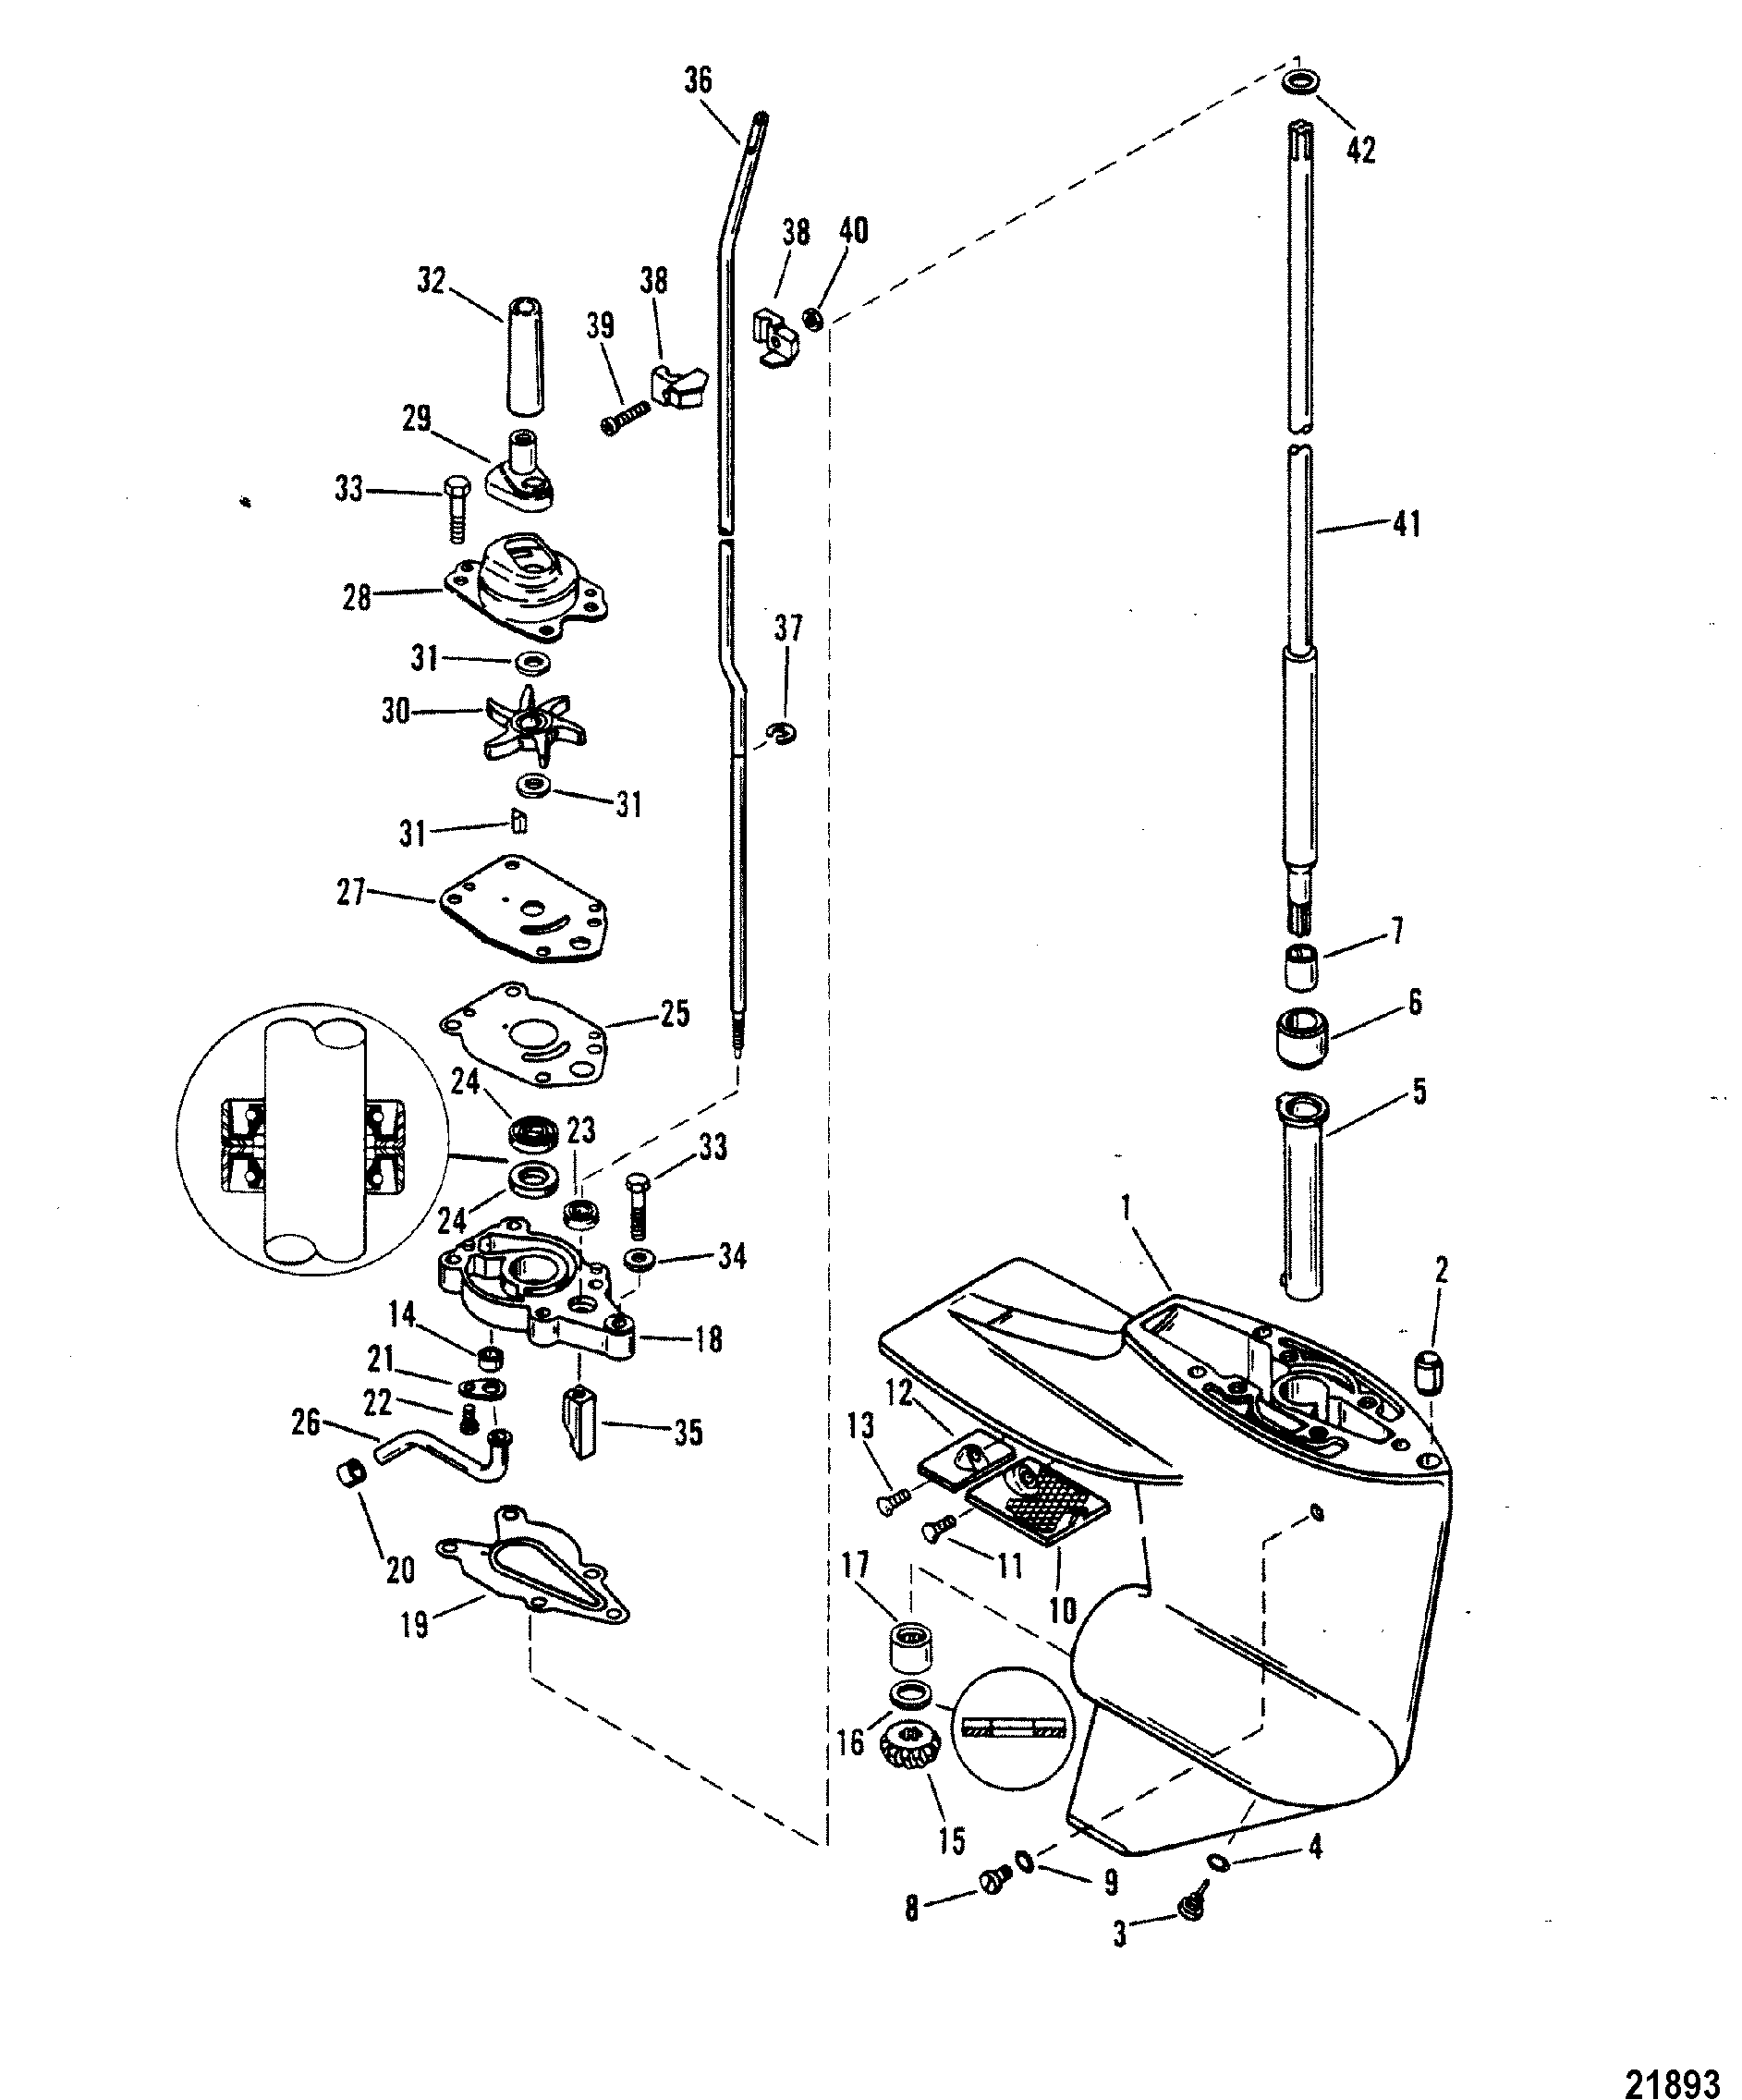 Gear Hsg(Driveshaft)(Design II-Refer to Reference #41)